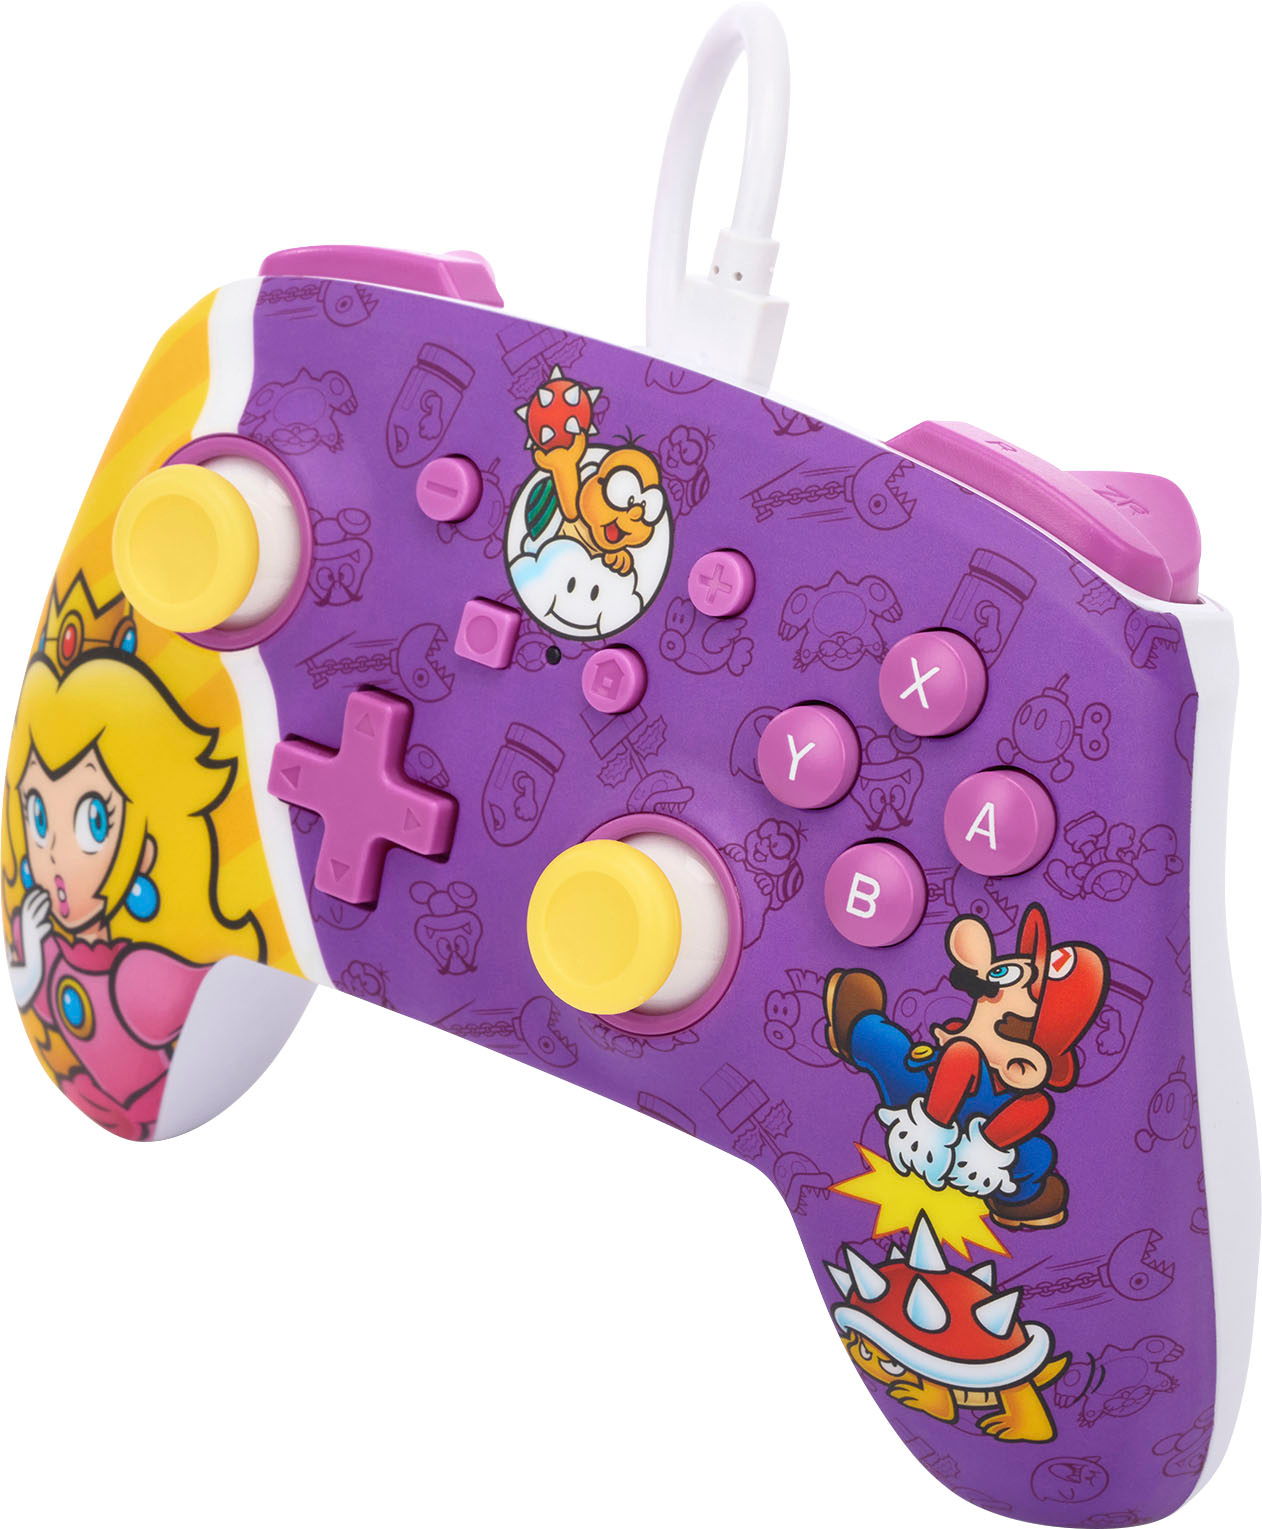 Custom Princess Peach Pastel Pink Nintendo Switch Pro Controller 